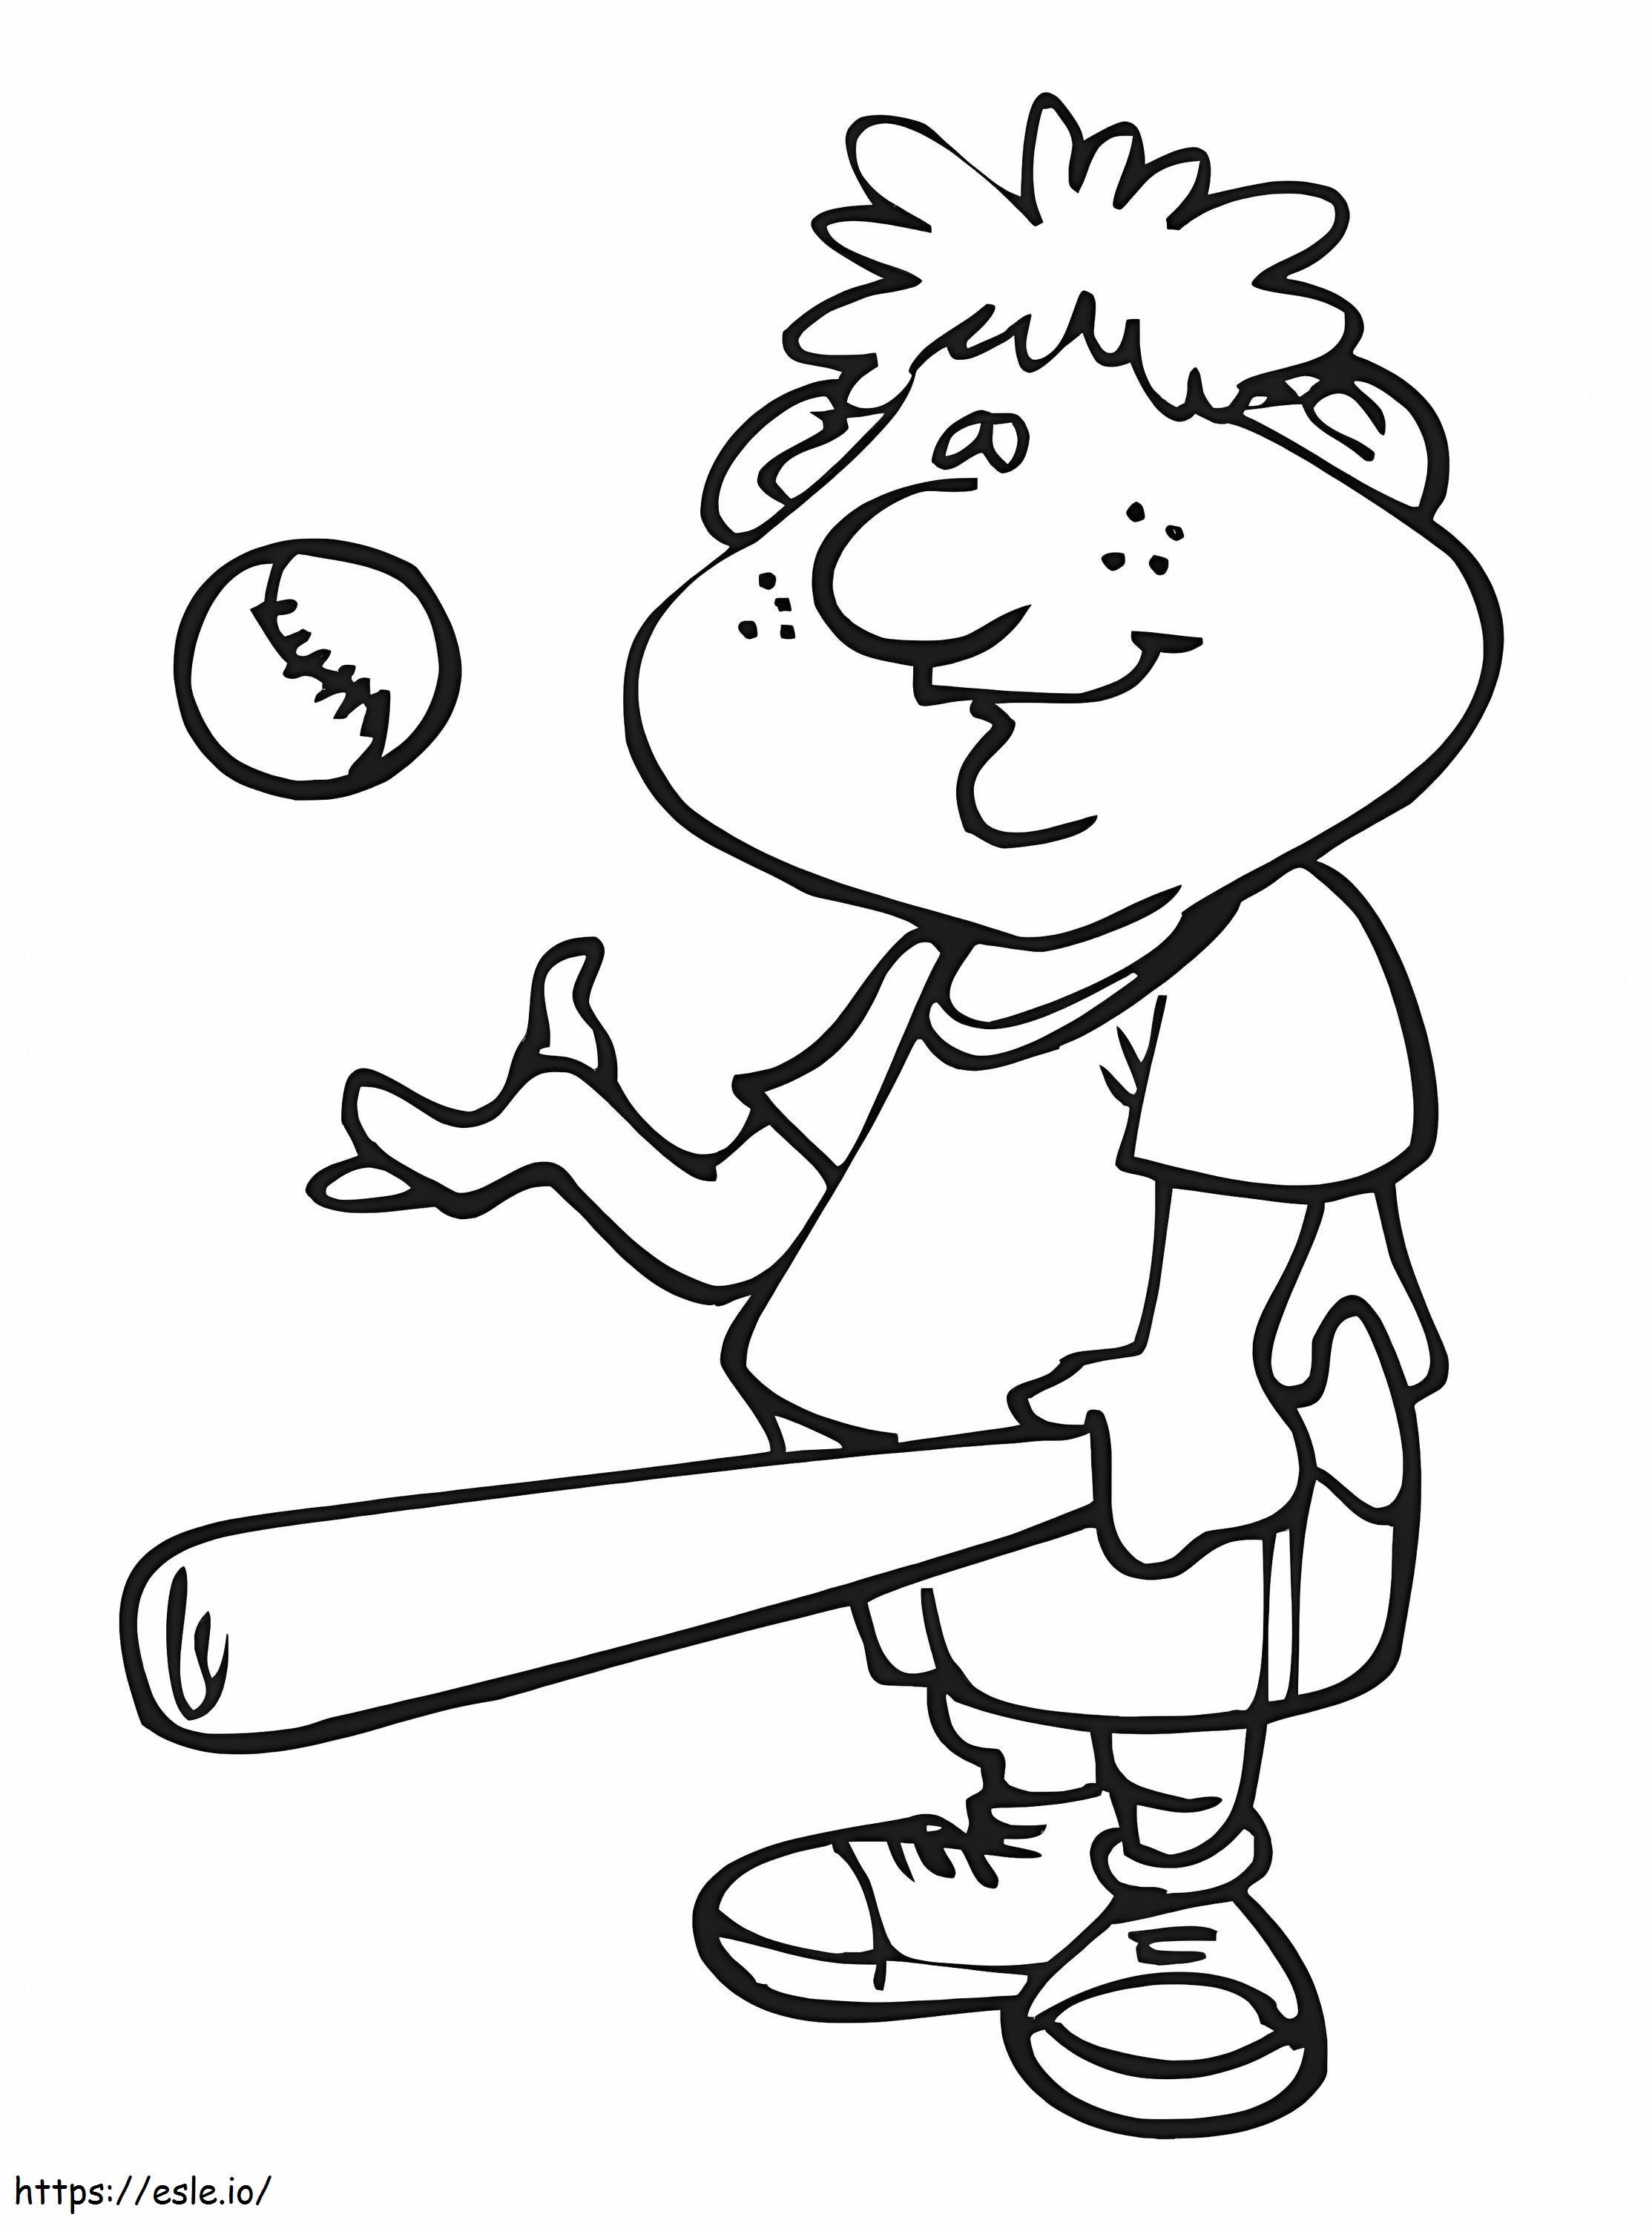 A Boy Playing Baseball coloring page